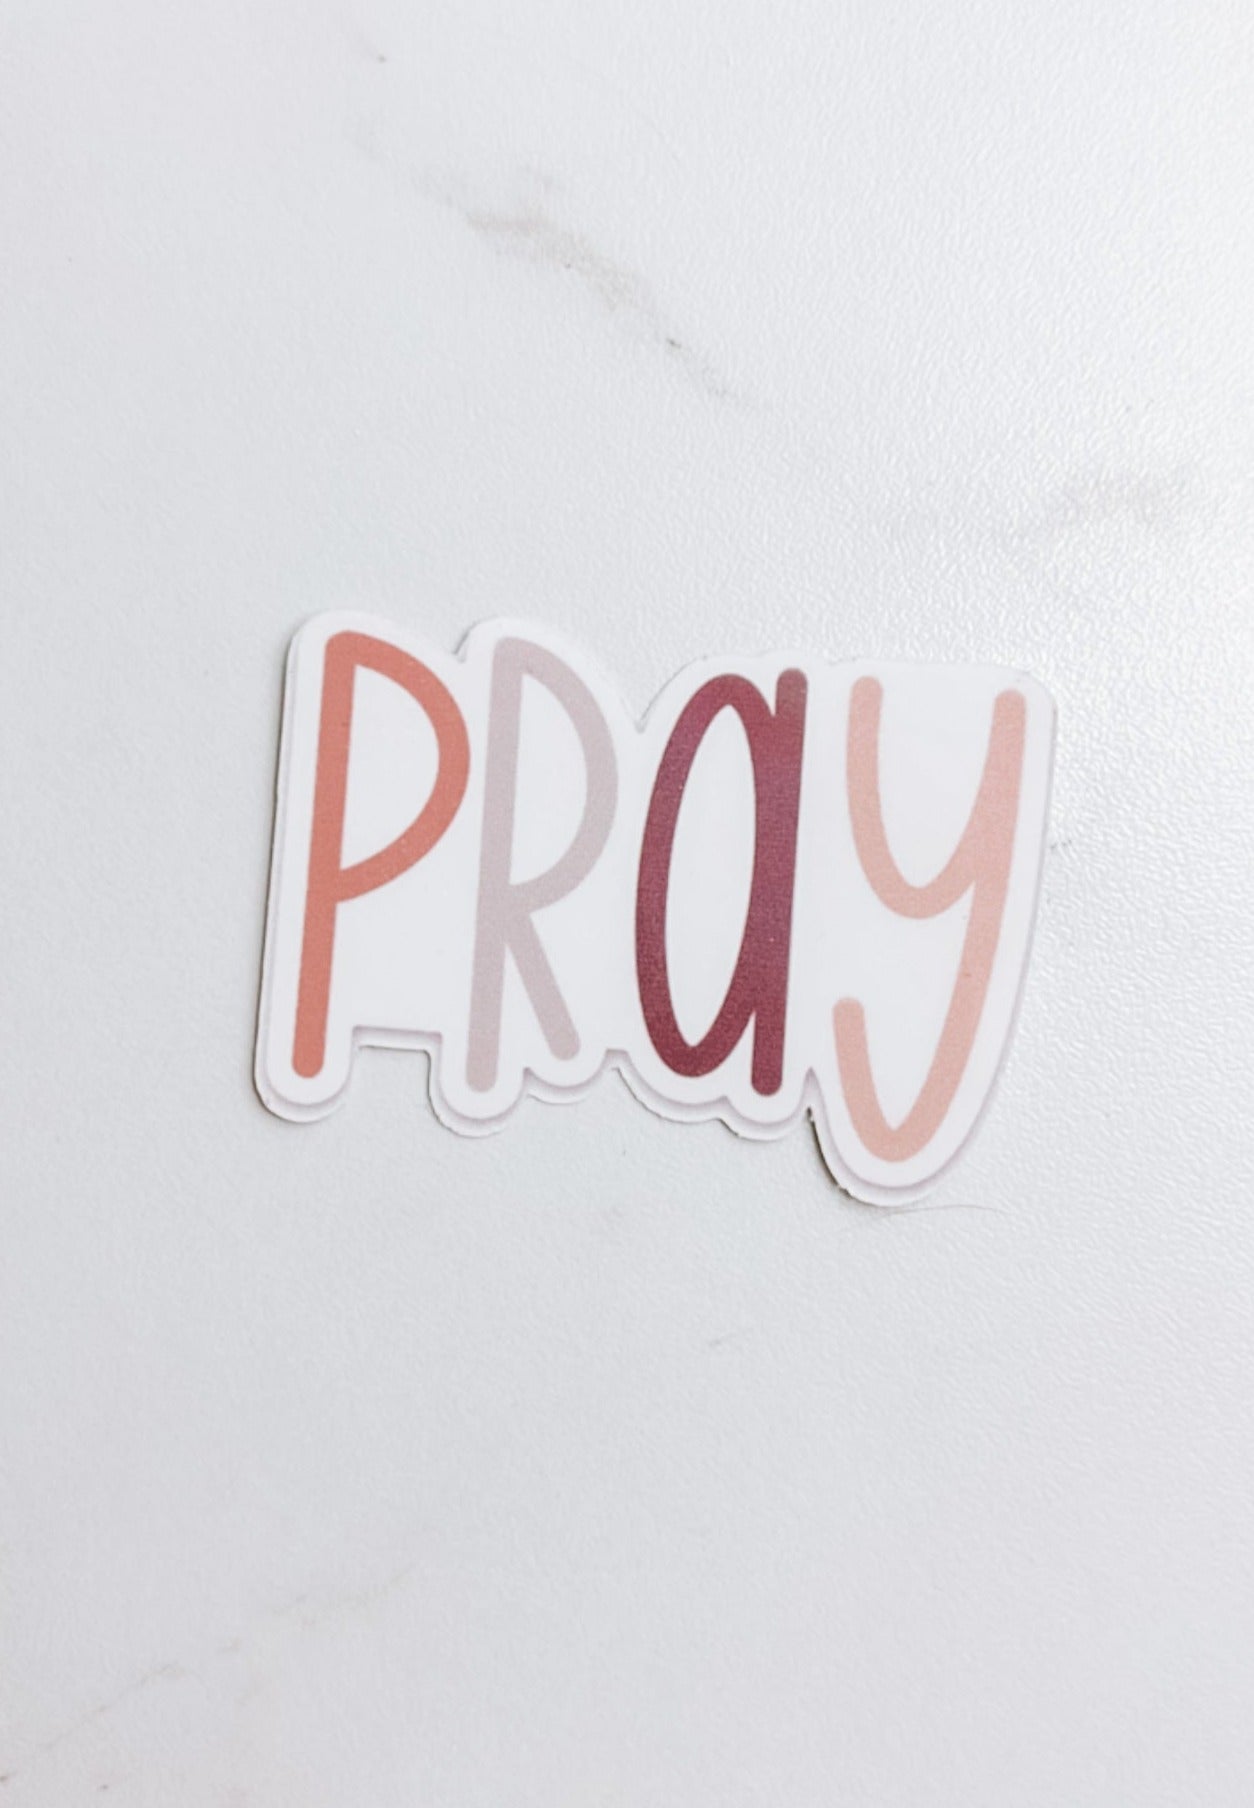 Pray Sticker